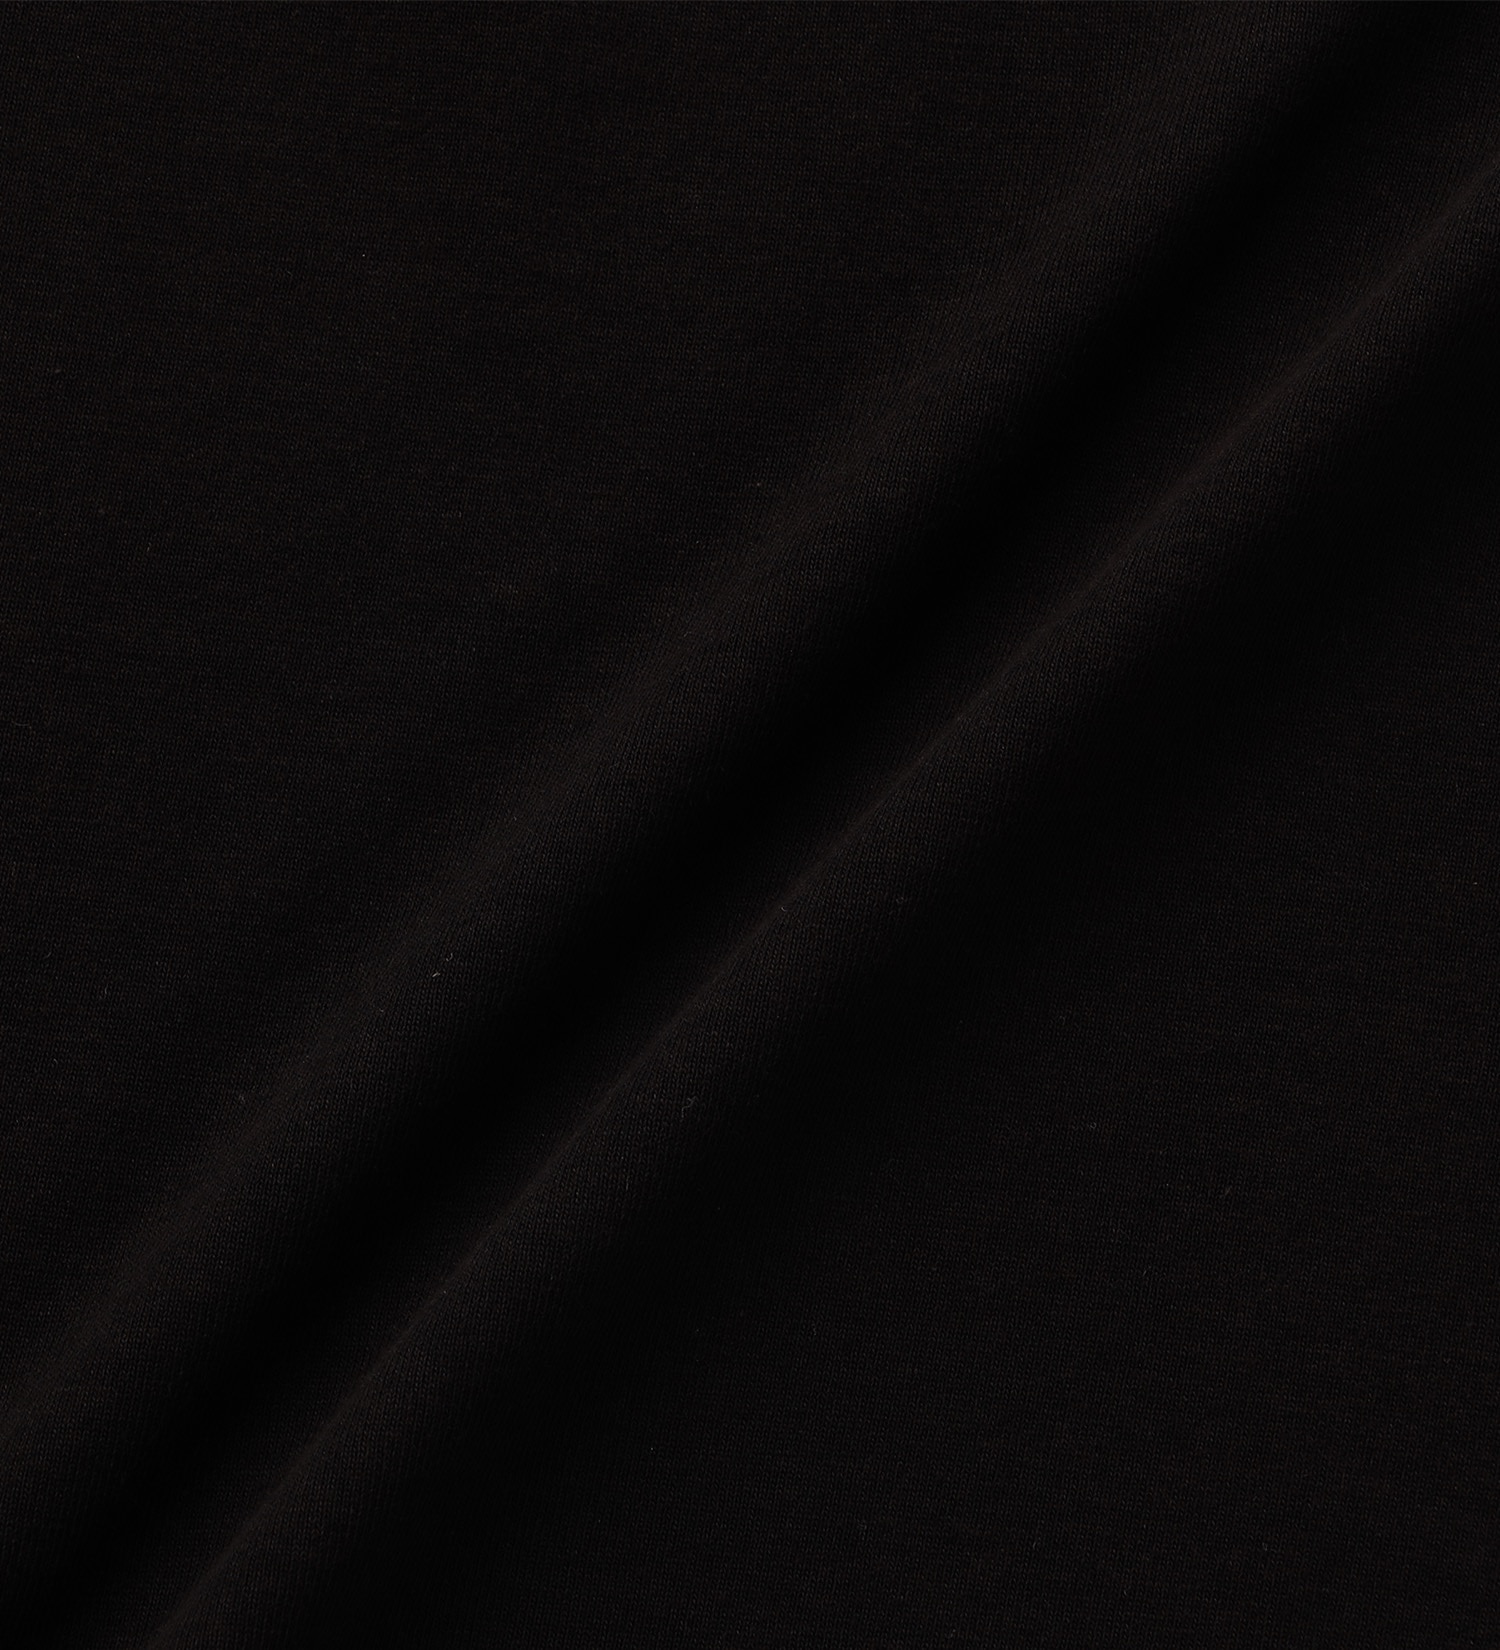 Lee(リー)の【GW SALE】【Lee GOLF】バックプリント半袖Tシャツ|トップス/Tシャツ/カットソー/メンズ|ブラック系その他